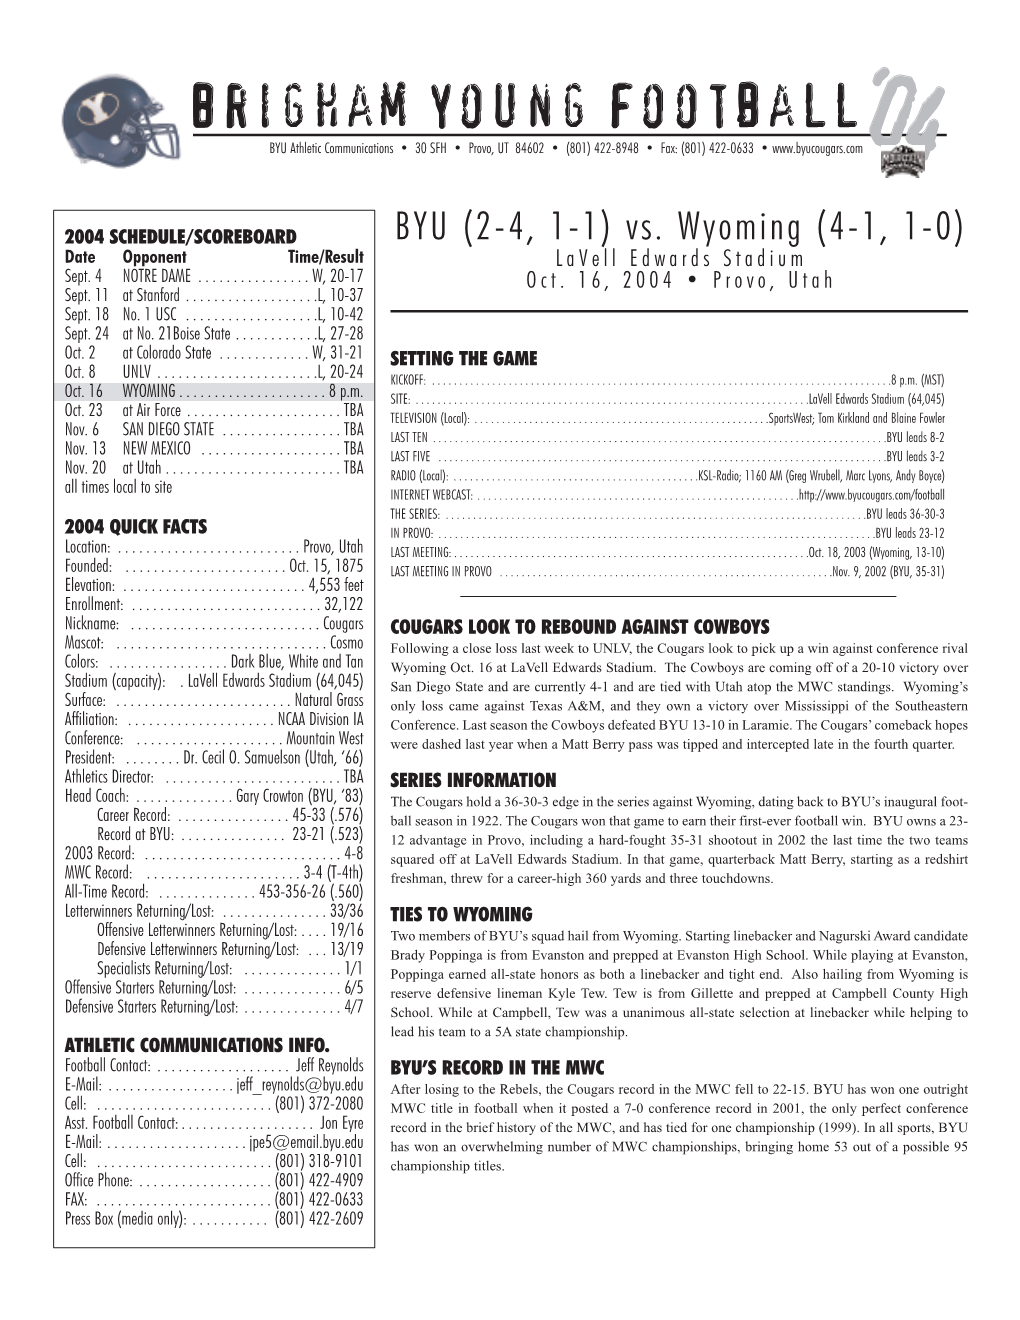 Brigham Young Football‘04 BYU Athletic Communications • 30 SFH • Provo, UT 84602 • (801) 422-8948 • Fax: (801) 422-0633 •